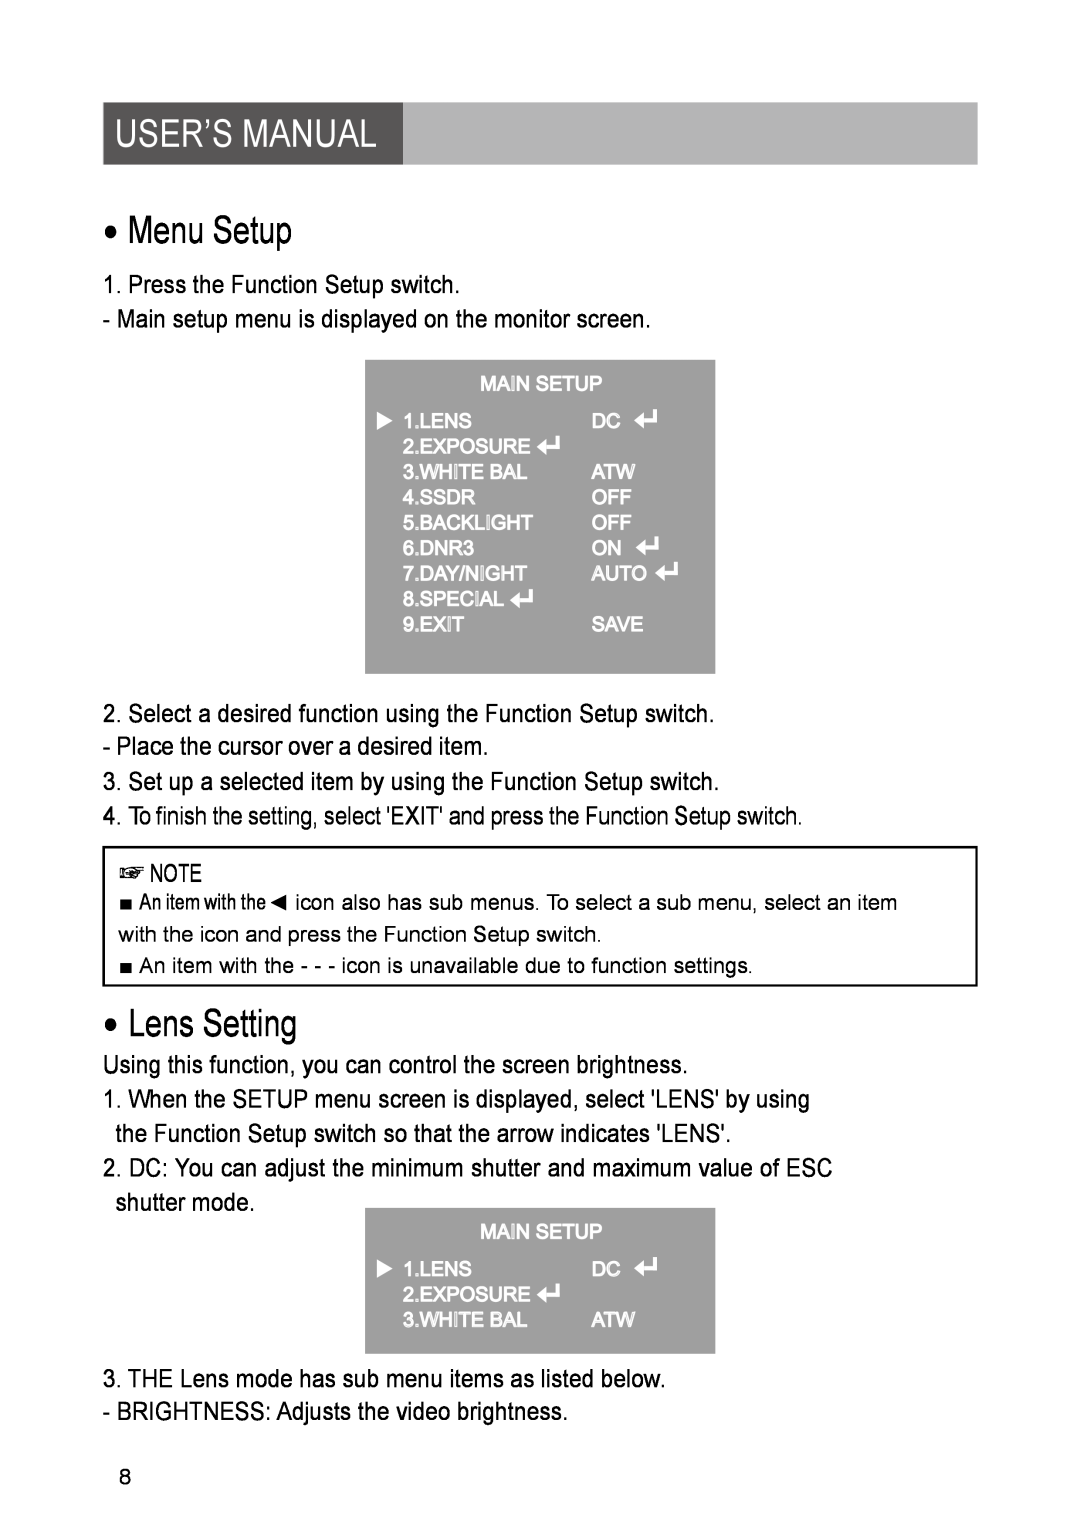 Yahee RETRT2812-1 manual Menu Setup, Lens Setting, User’S Manual 